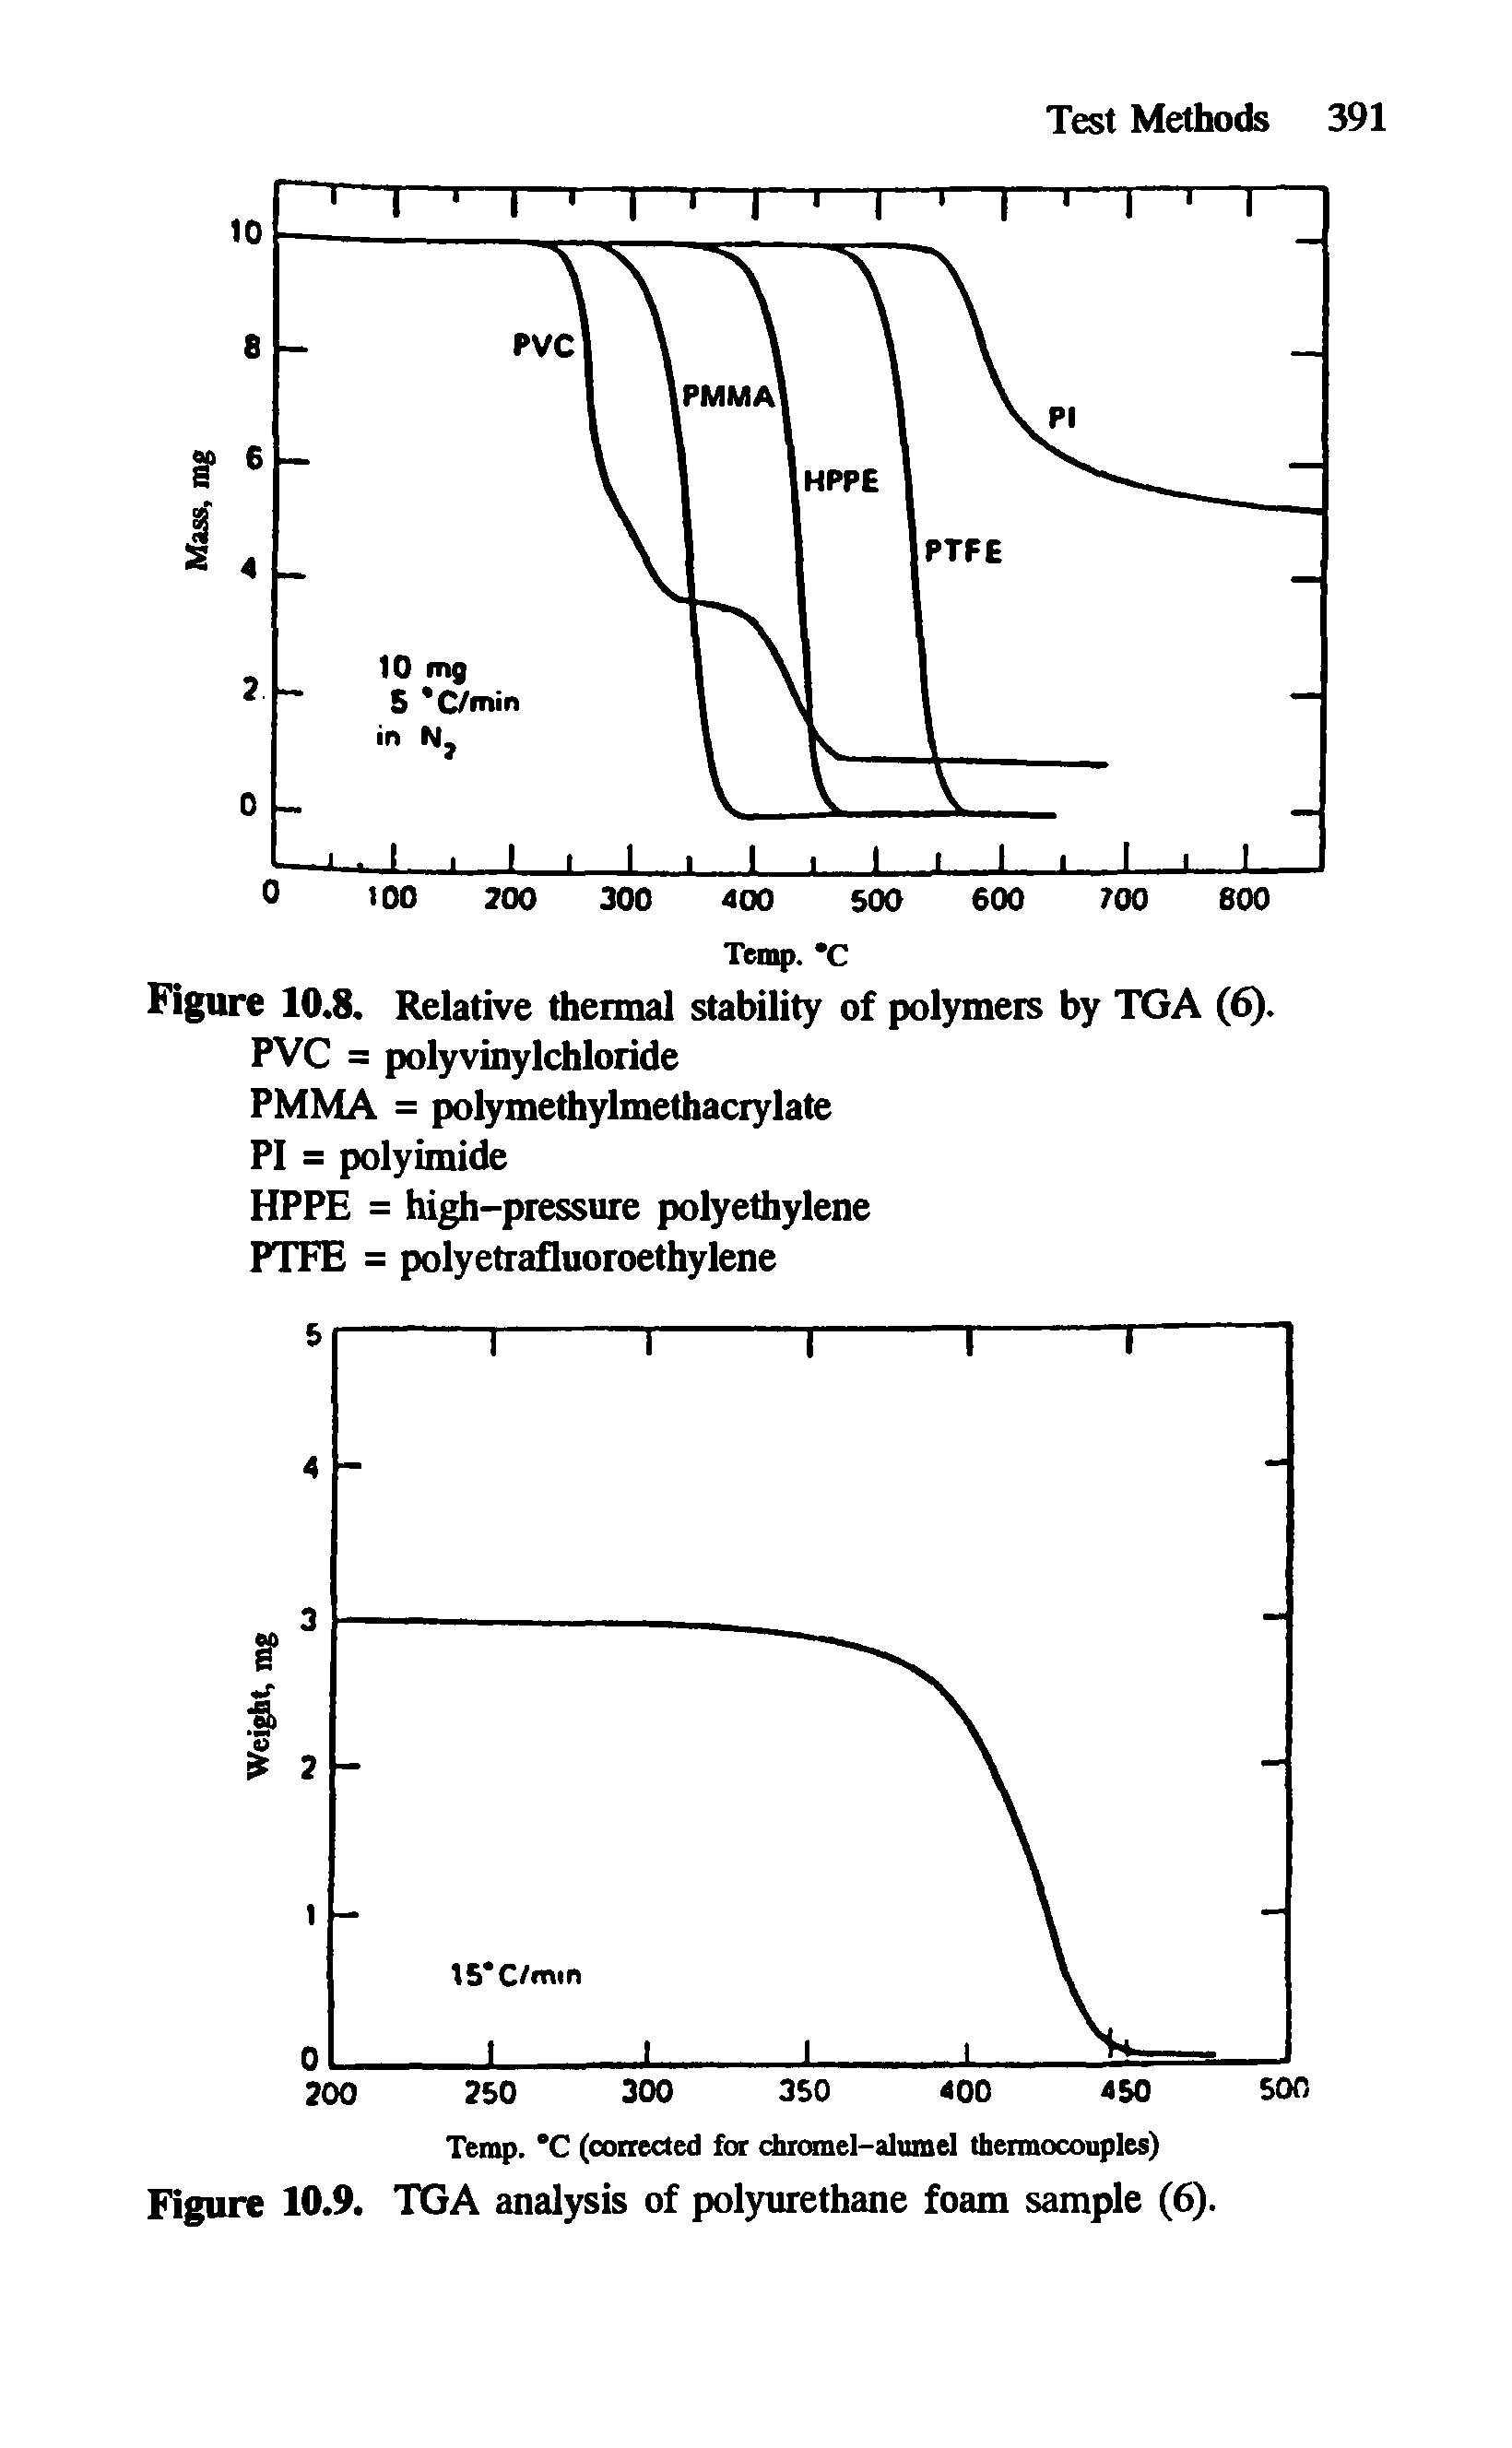 Figure 10.8. Relative thermal stability of polymers by TGA (6). PVC = polyvinylchloride PMMA = polymethylmethacrylate PI = polyimide...